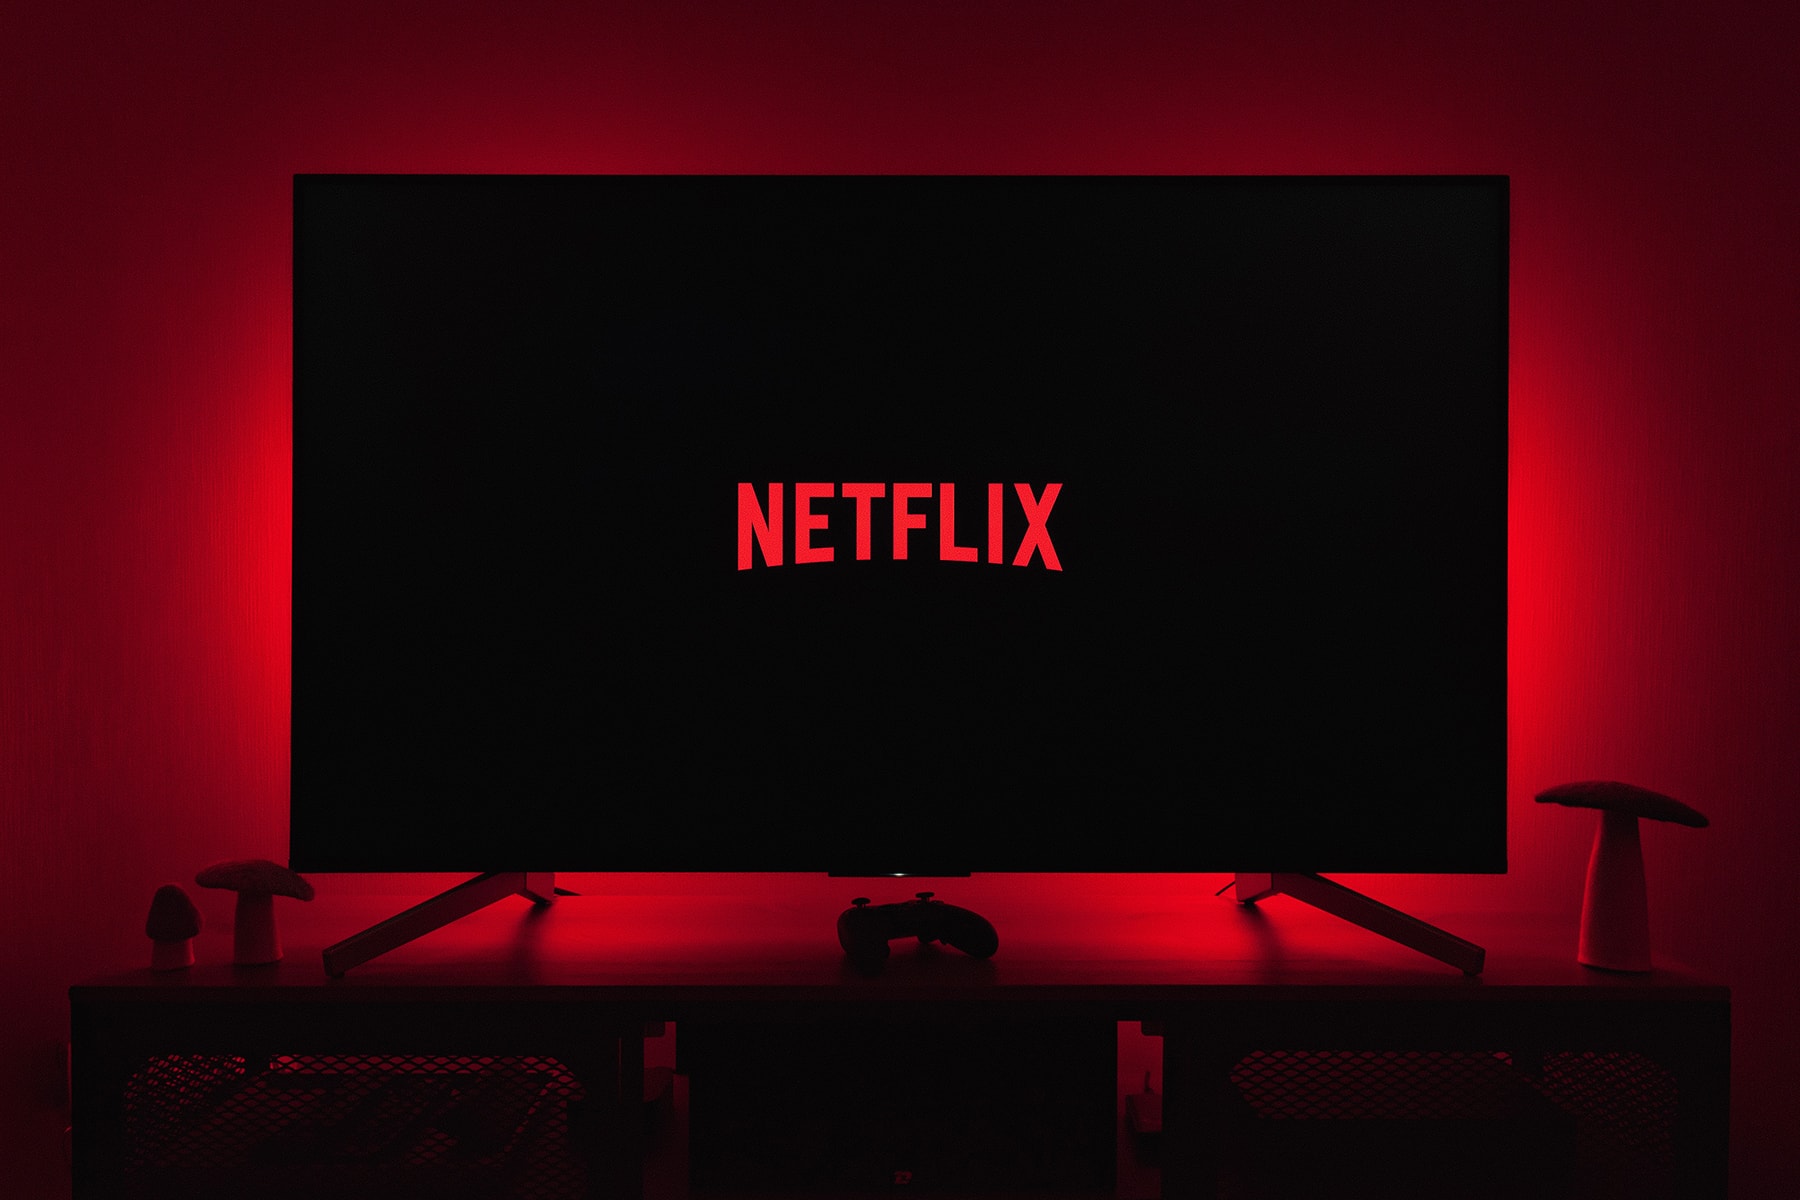 Netflix 970000 subscribers quarterly loss info streaming stranger things season 4 entertainment shows series TV 